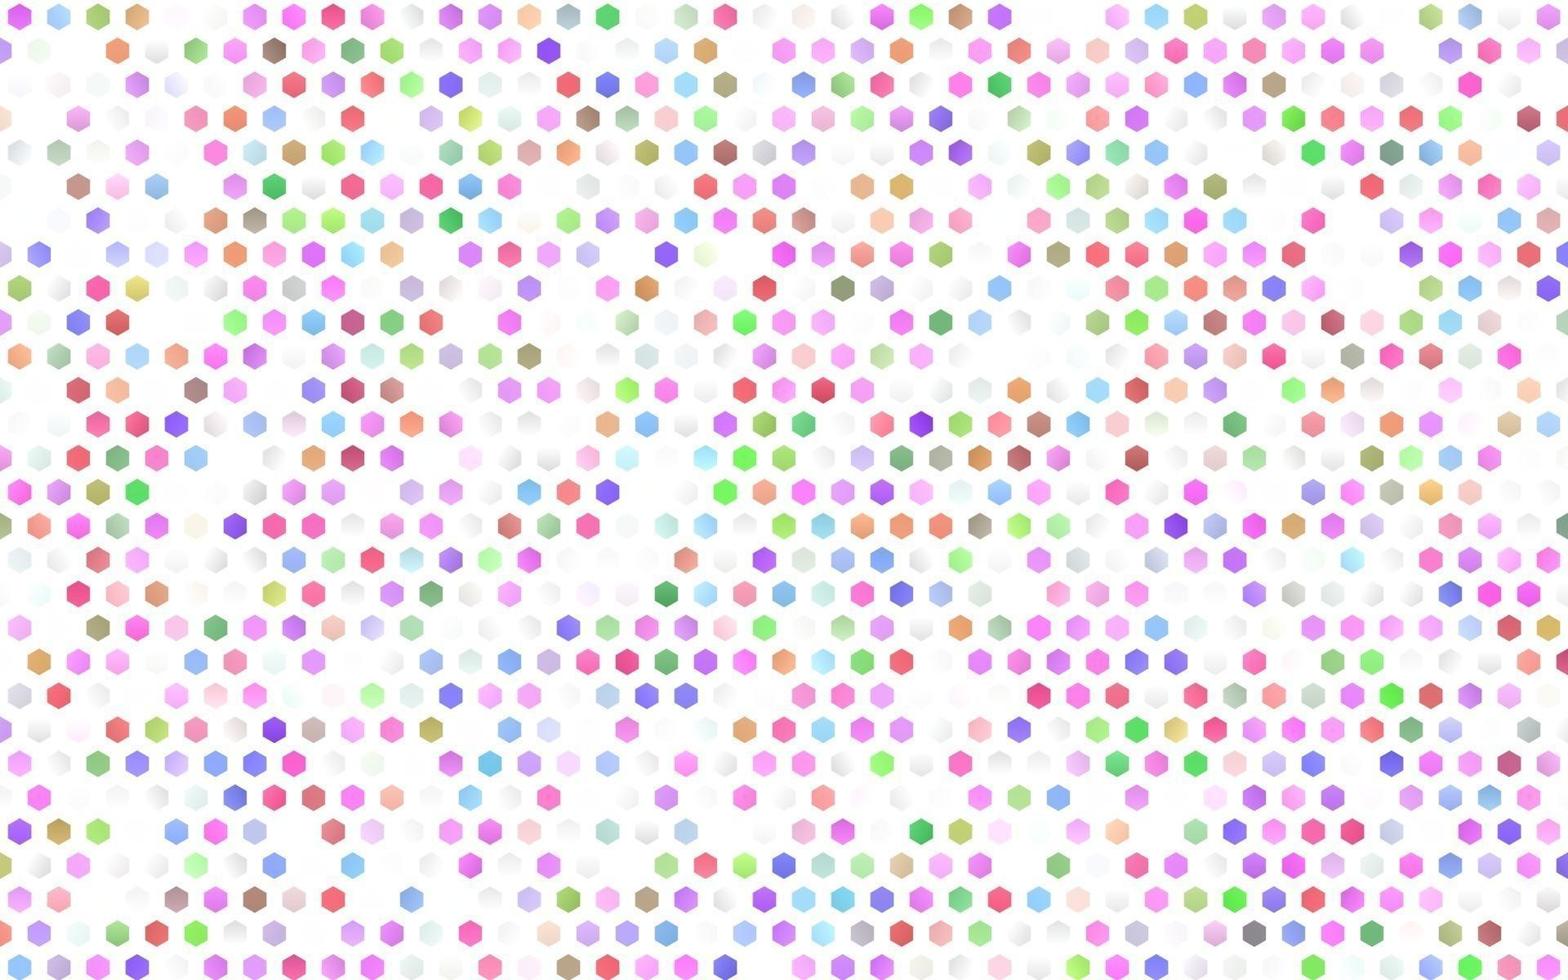 motif vectoriel arc-en-ciel multicolore clair avec hexagones colorés.